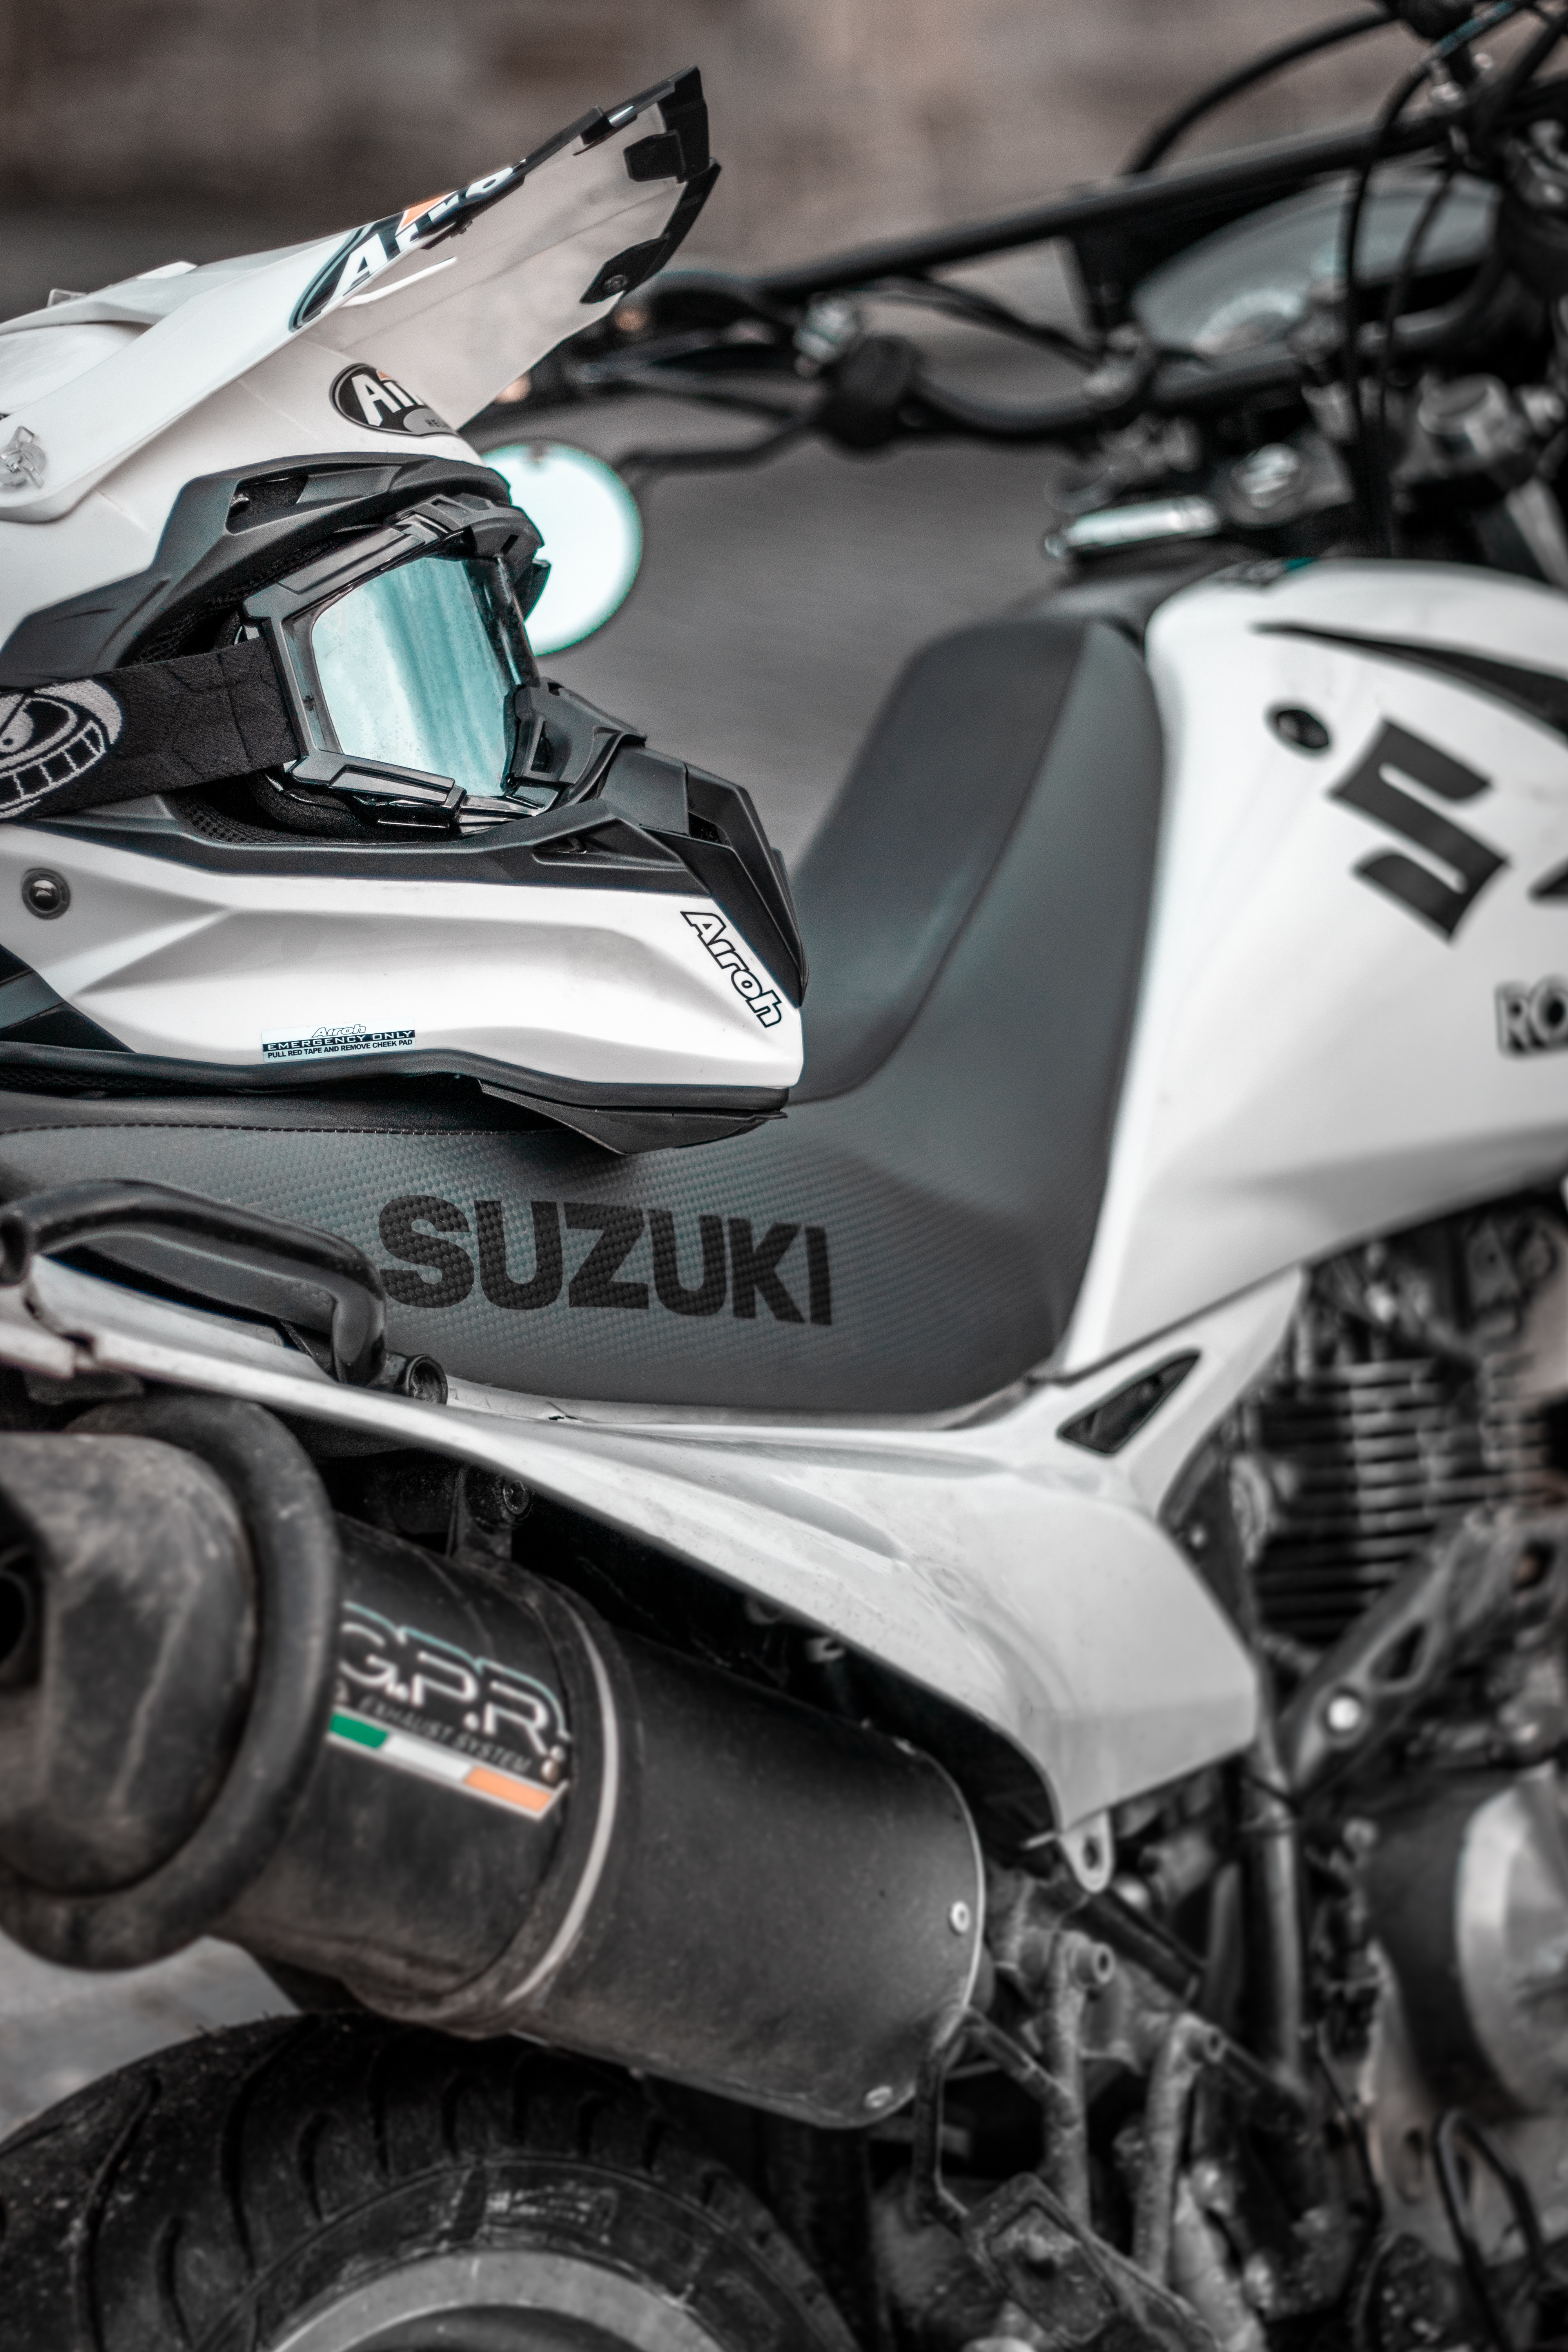 72016 скачать обои сузуки (suzuki), мотоциклы, мотоцикл, шлем, байк - заставки и картинки бесплатно